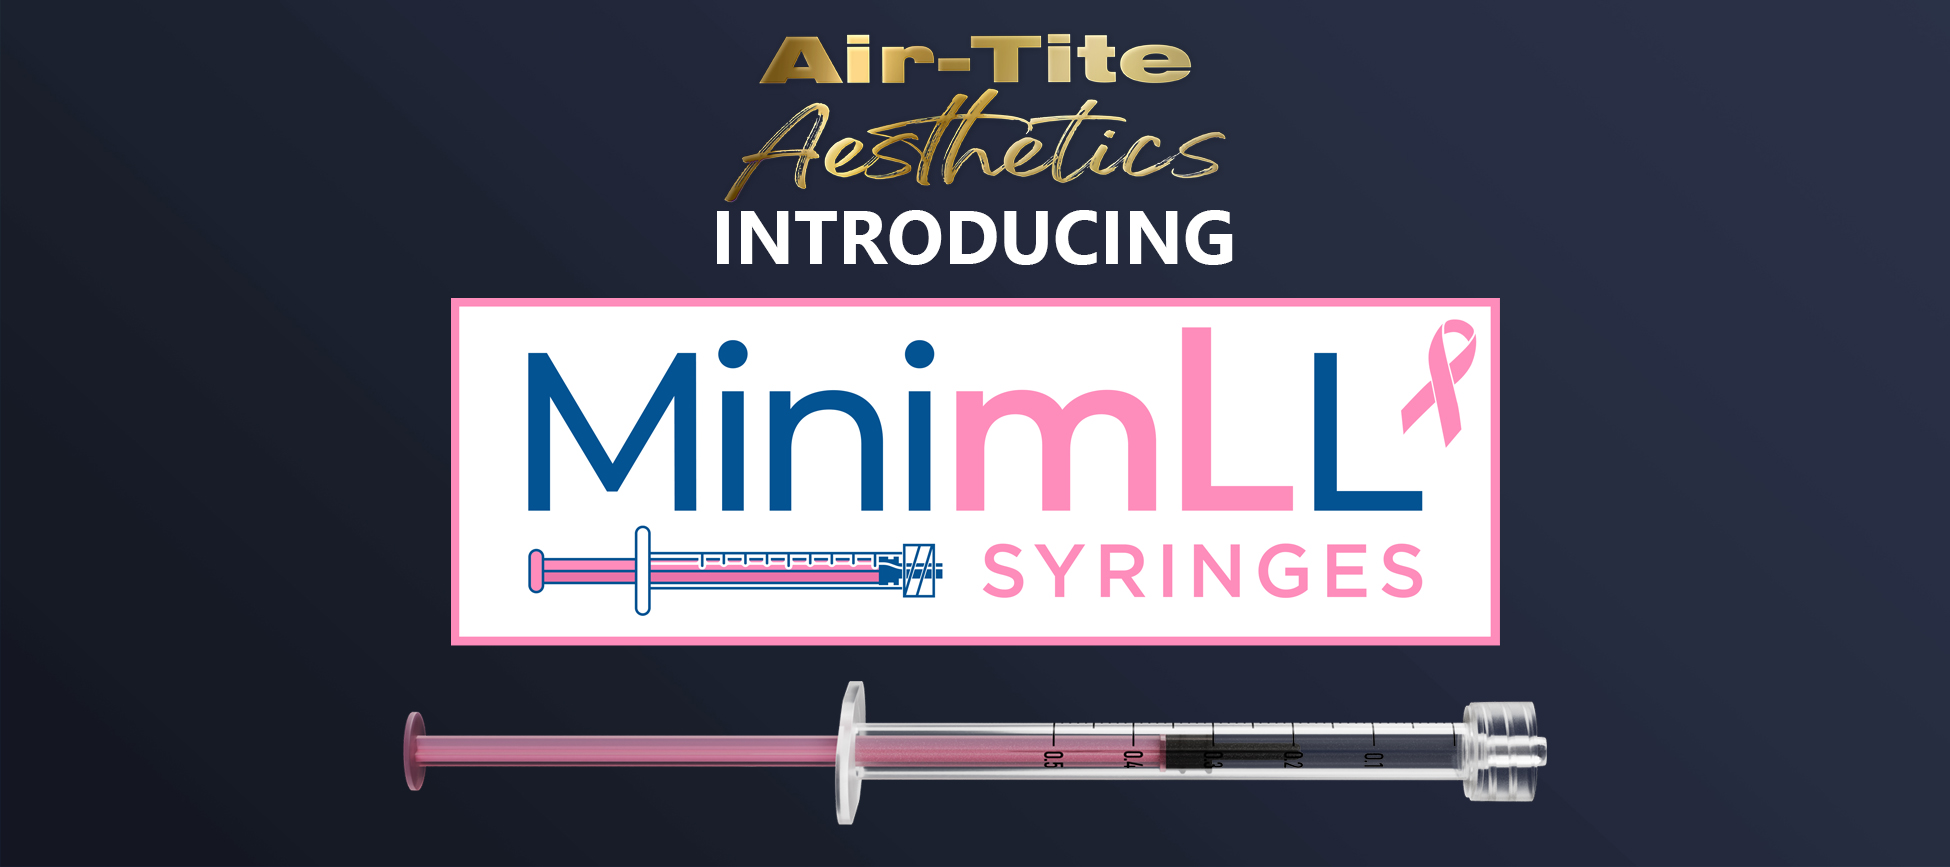 MinimLL Syringes from Air-Tite